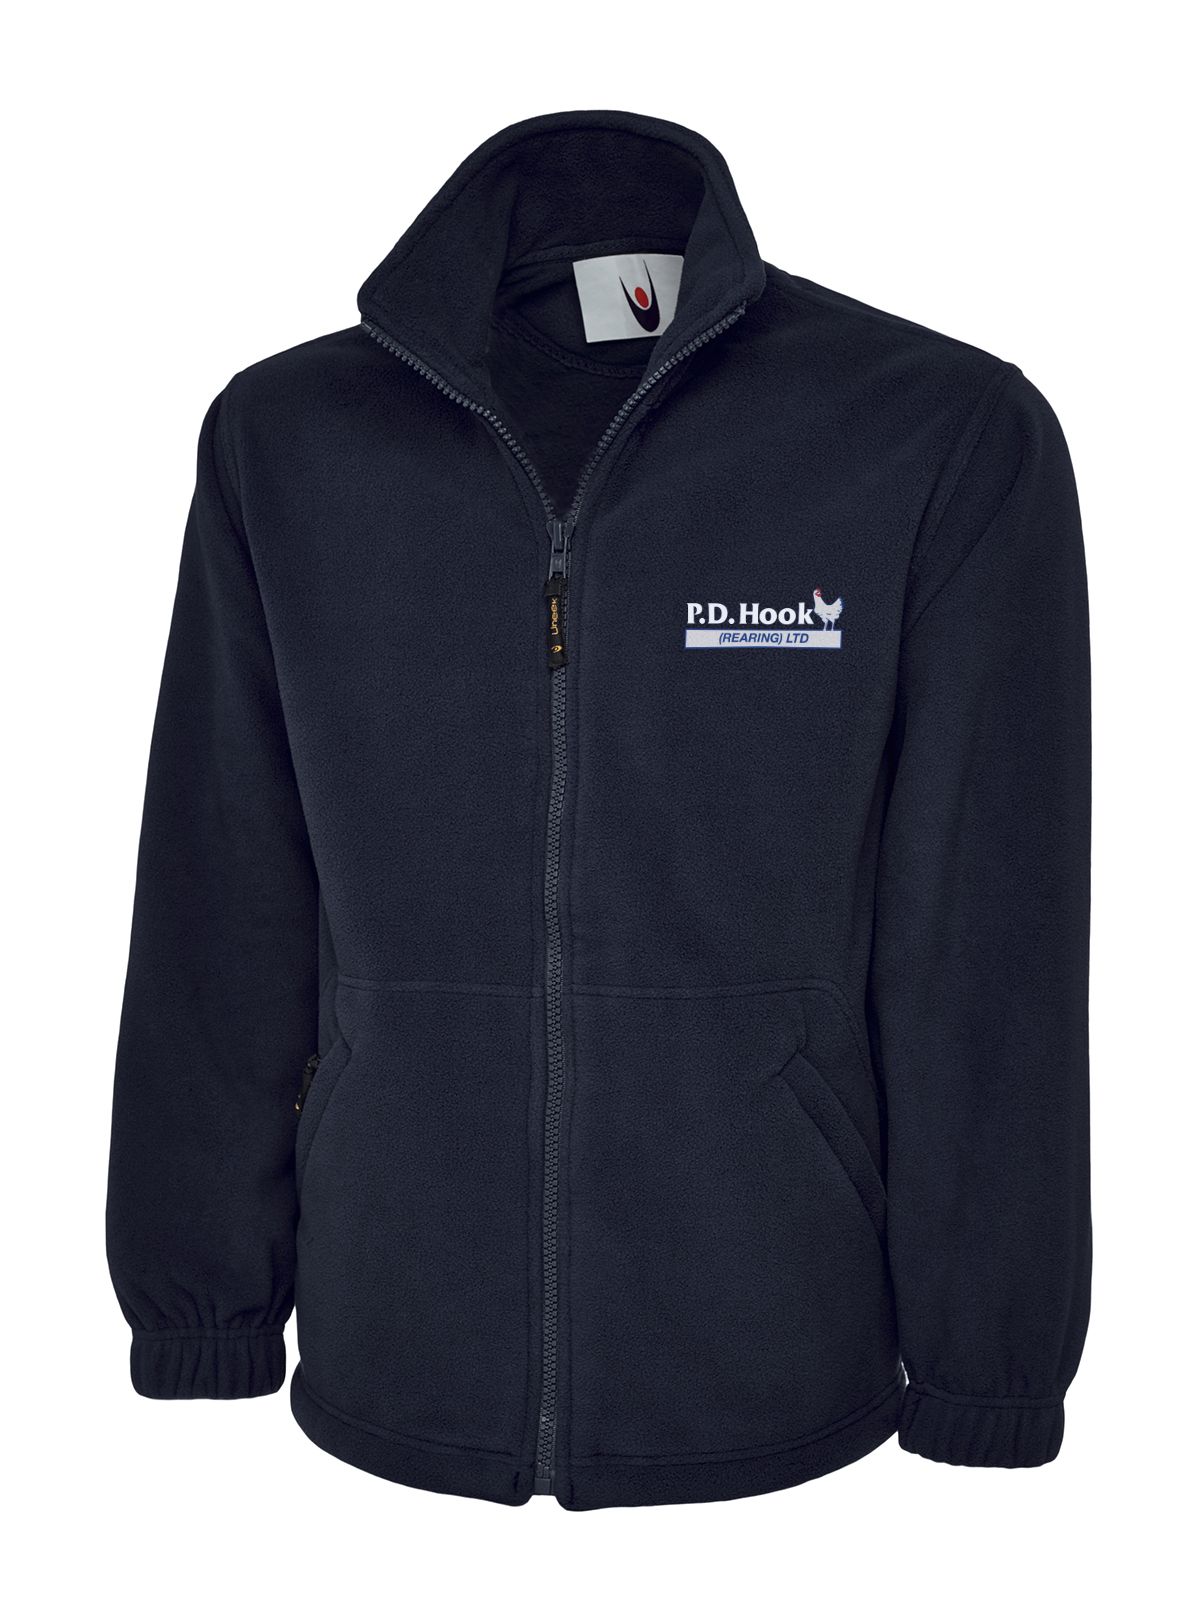 P D Hook (Rearing) Ltd - Full Zip Fleece Jacket, Navy - Size Medium